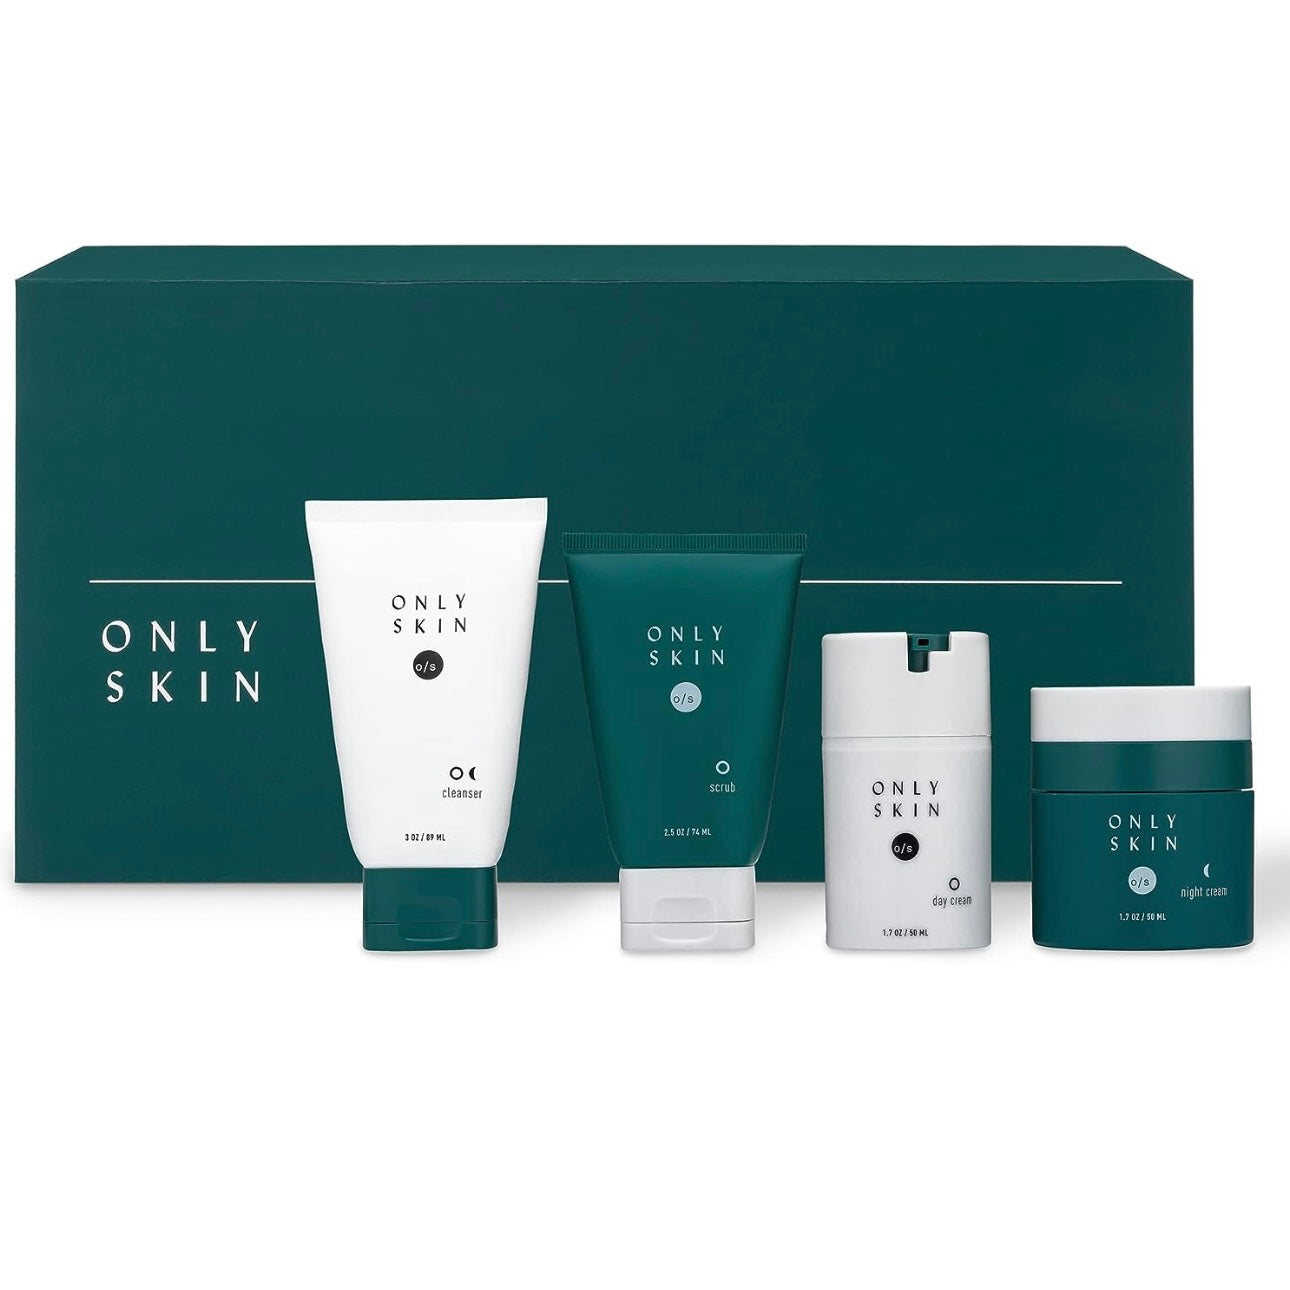 Only Skin Men's Premium Skin Care Kit, 5-Piece, Face Cleanser, Face Scrub, Eye Serum, Day & Night Moisturizer Gift Set for Men